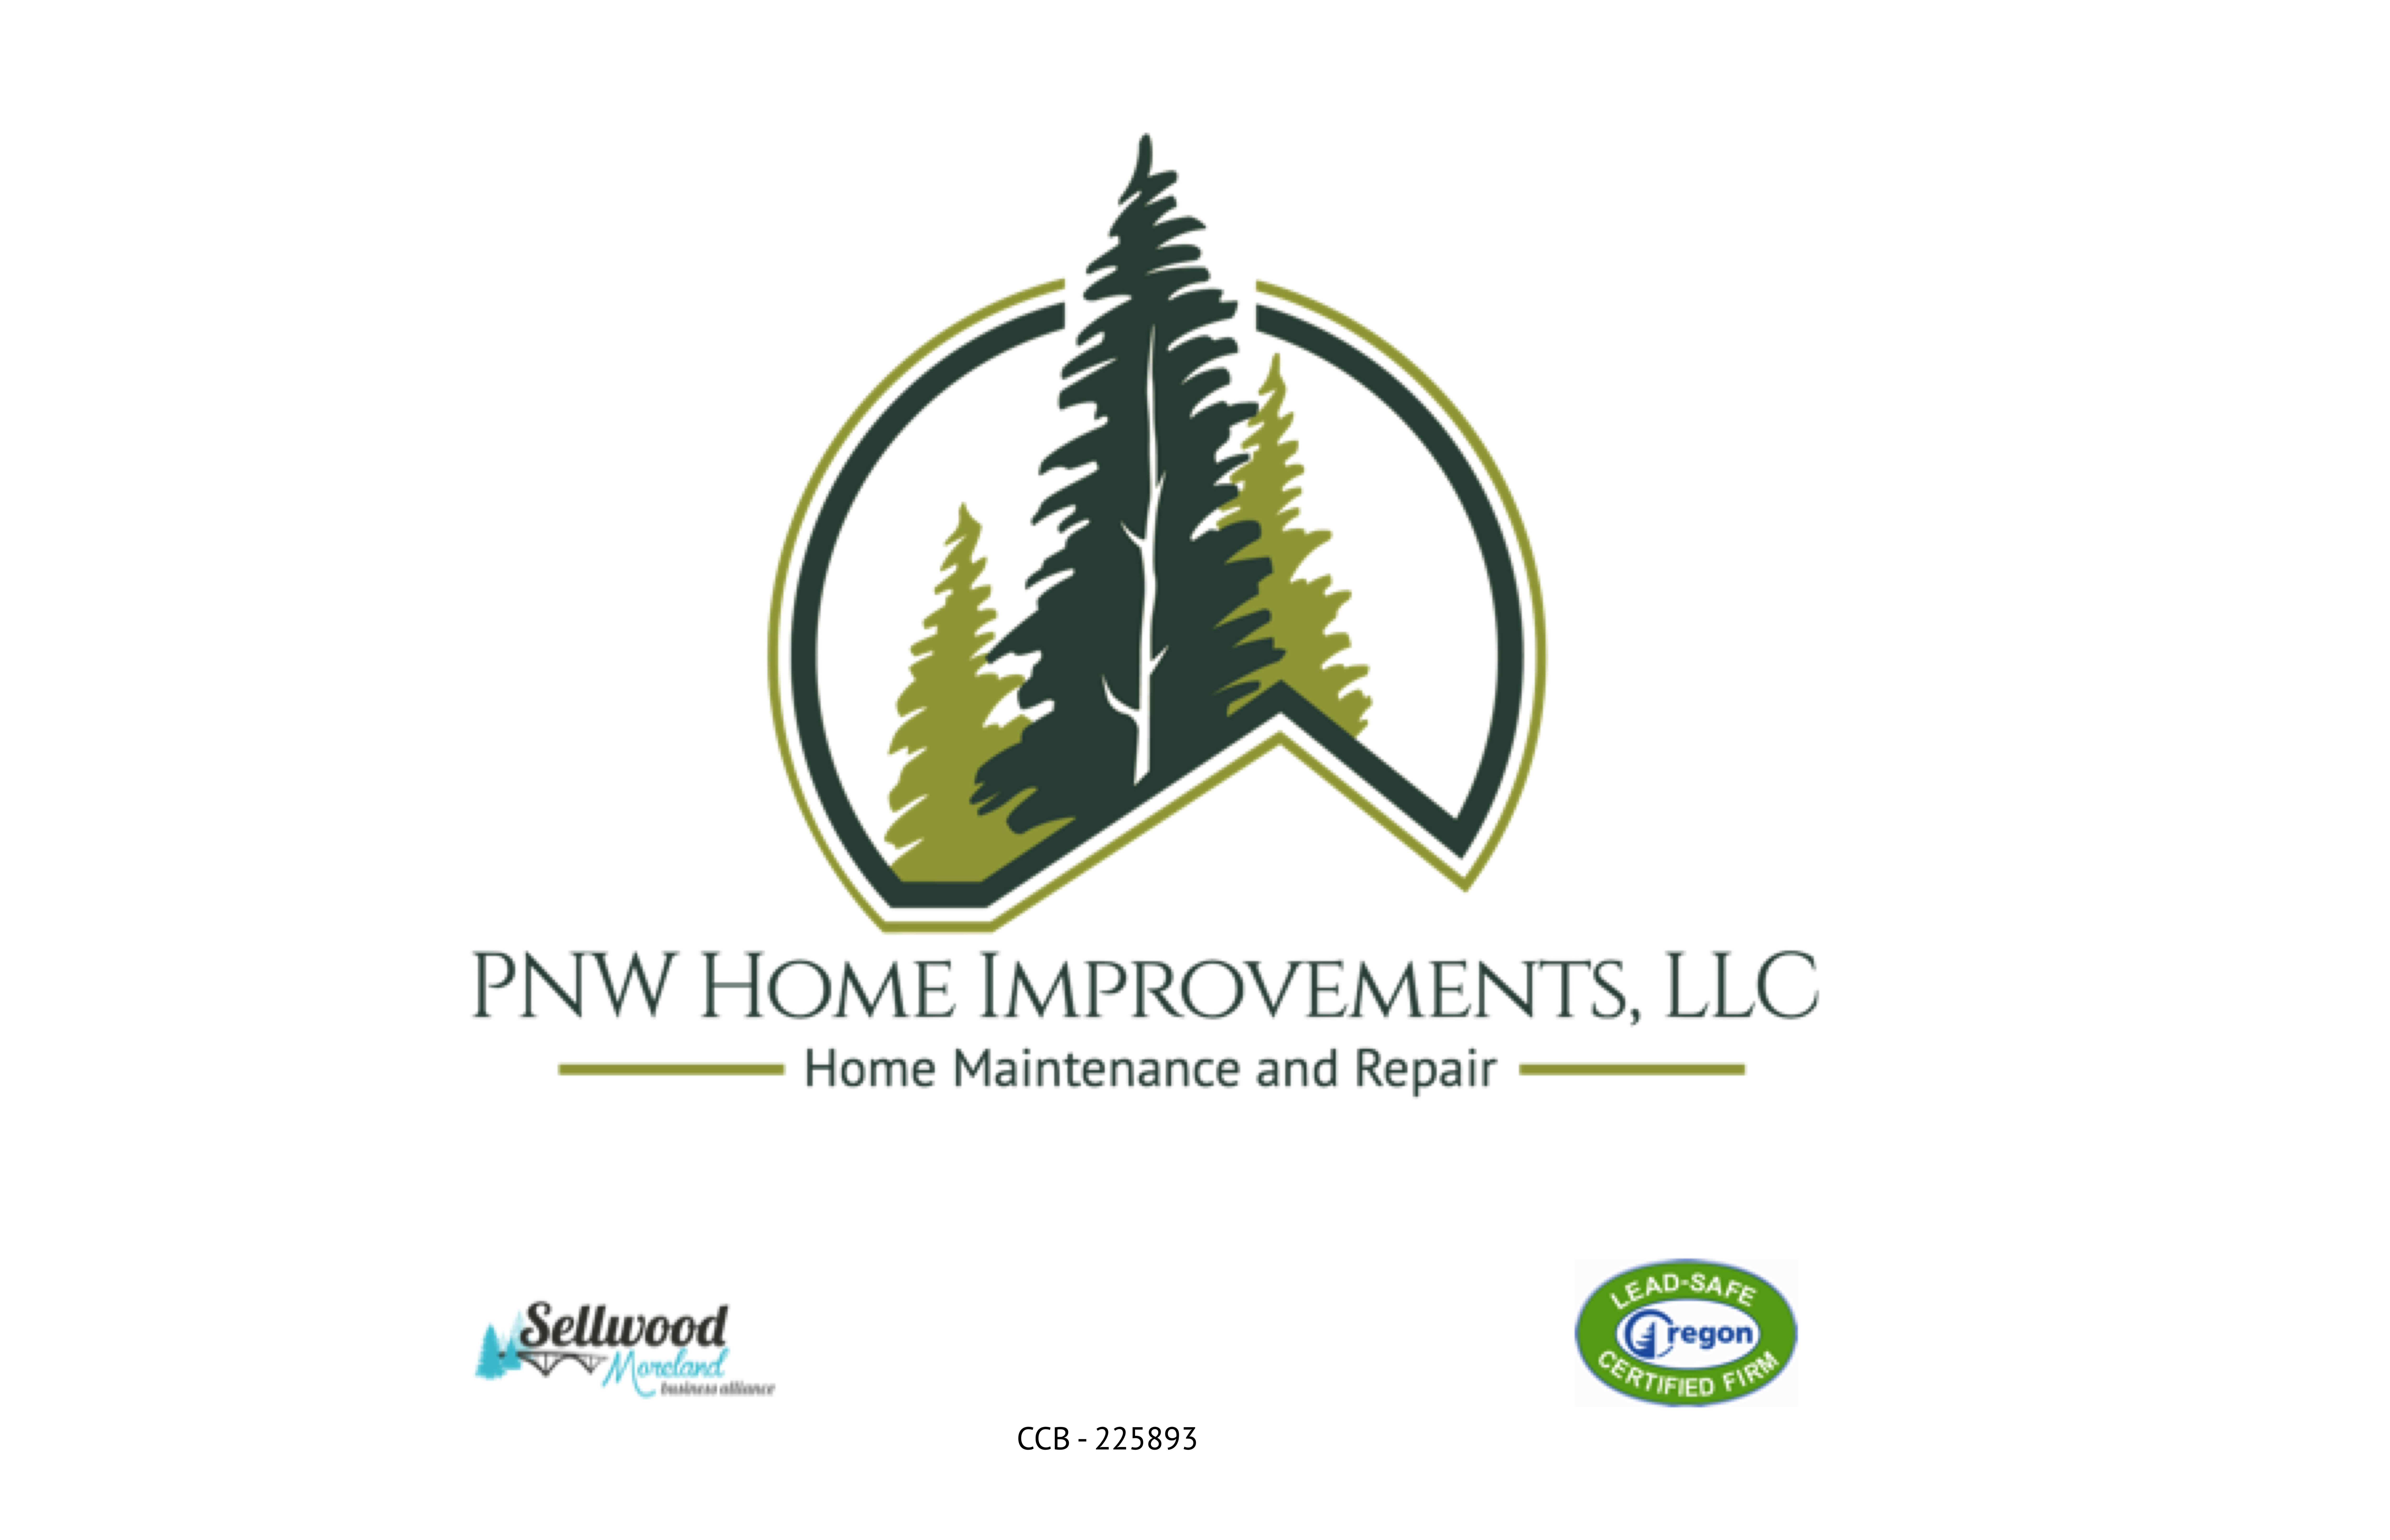 PNW Home Improvements, LLC logo